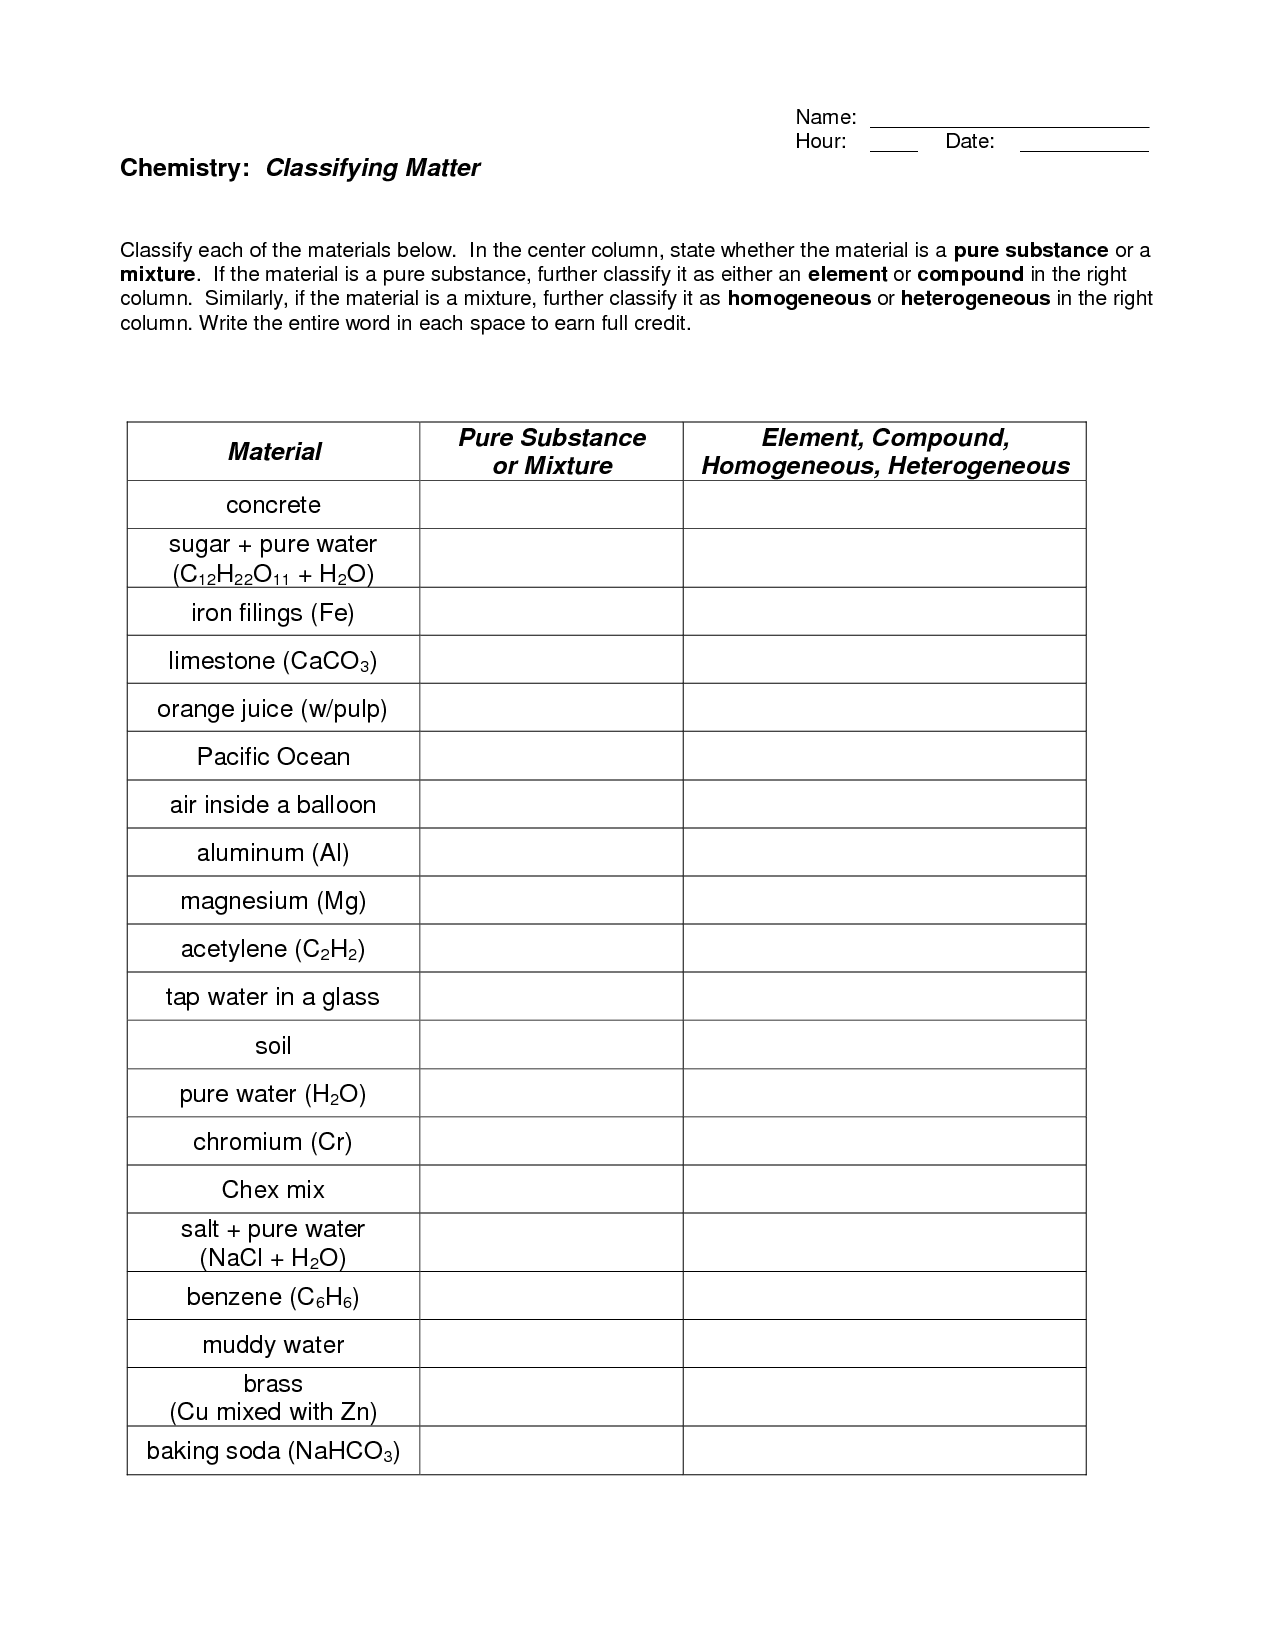 Classifying Matter Worksheet Answers Image